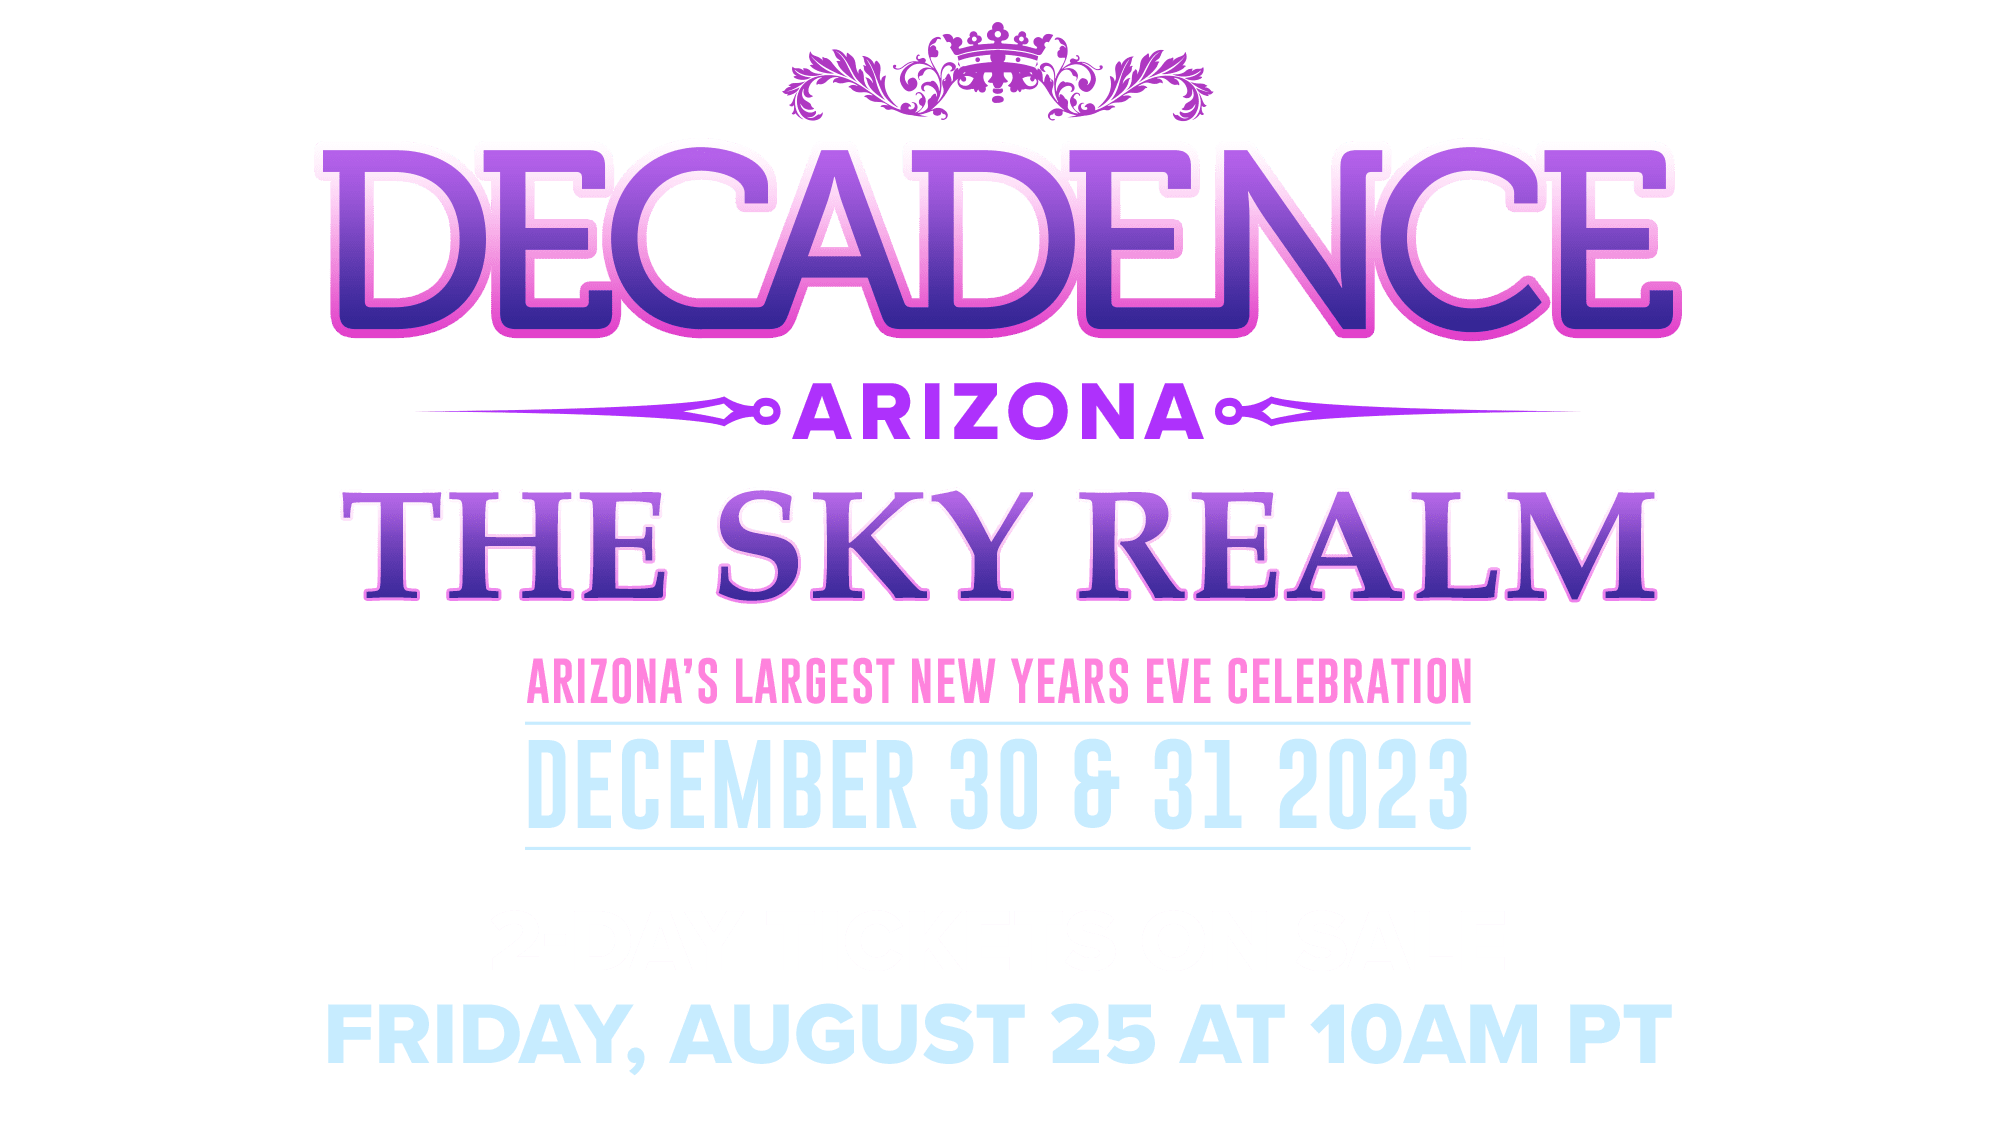 decadence-arizona-december-30-31-2023